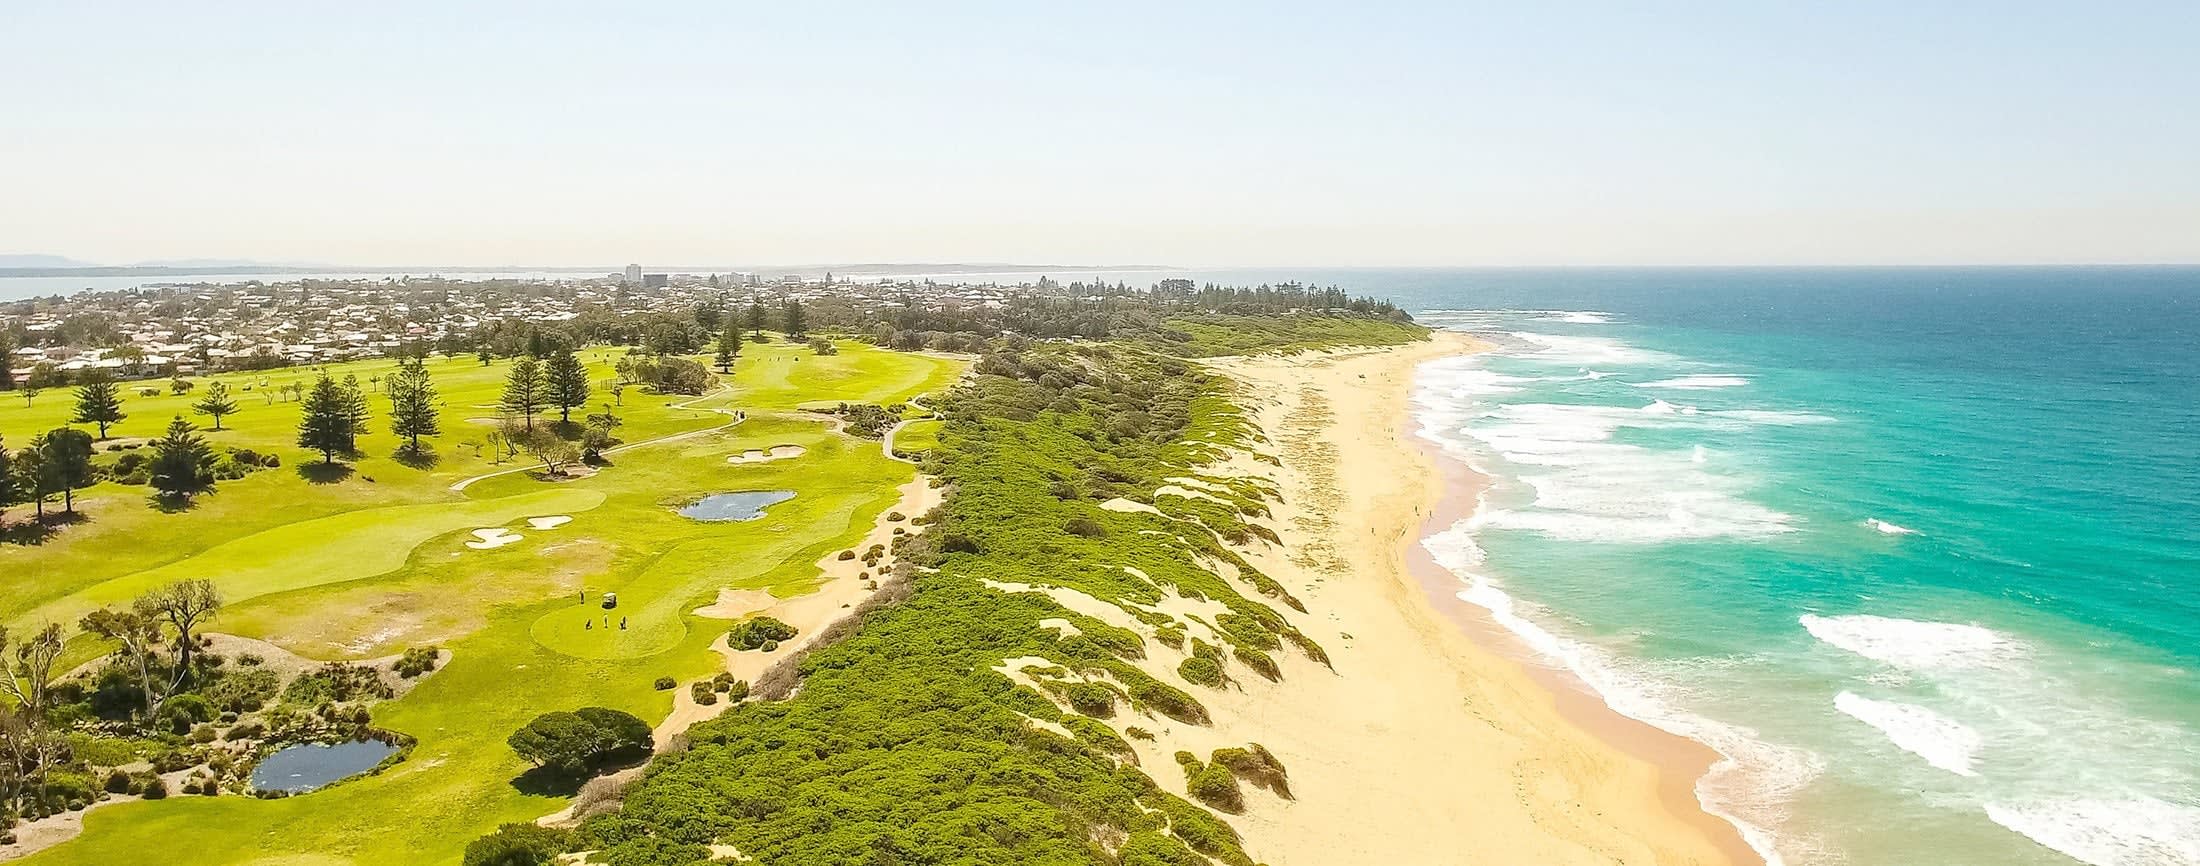 Shelly Beach Golf Club - Golf course and restaurant - 8.3 km